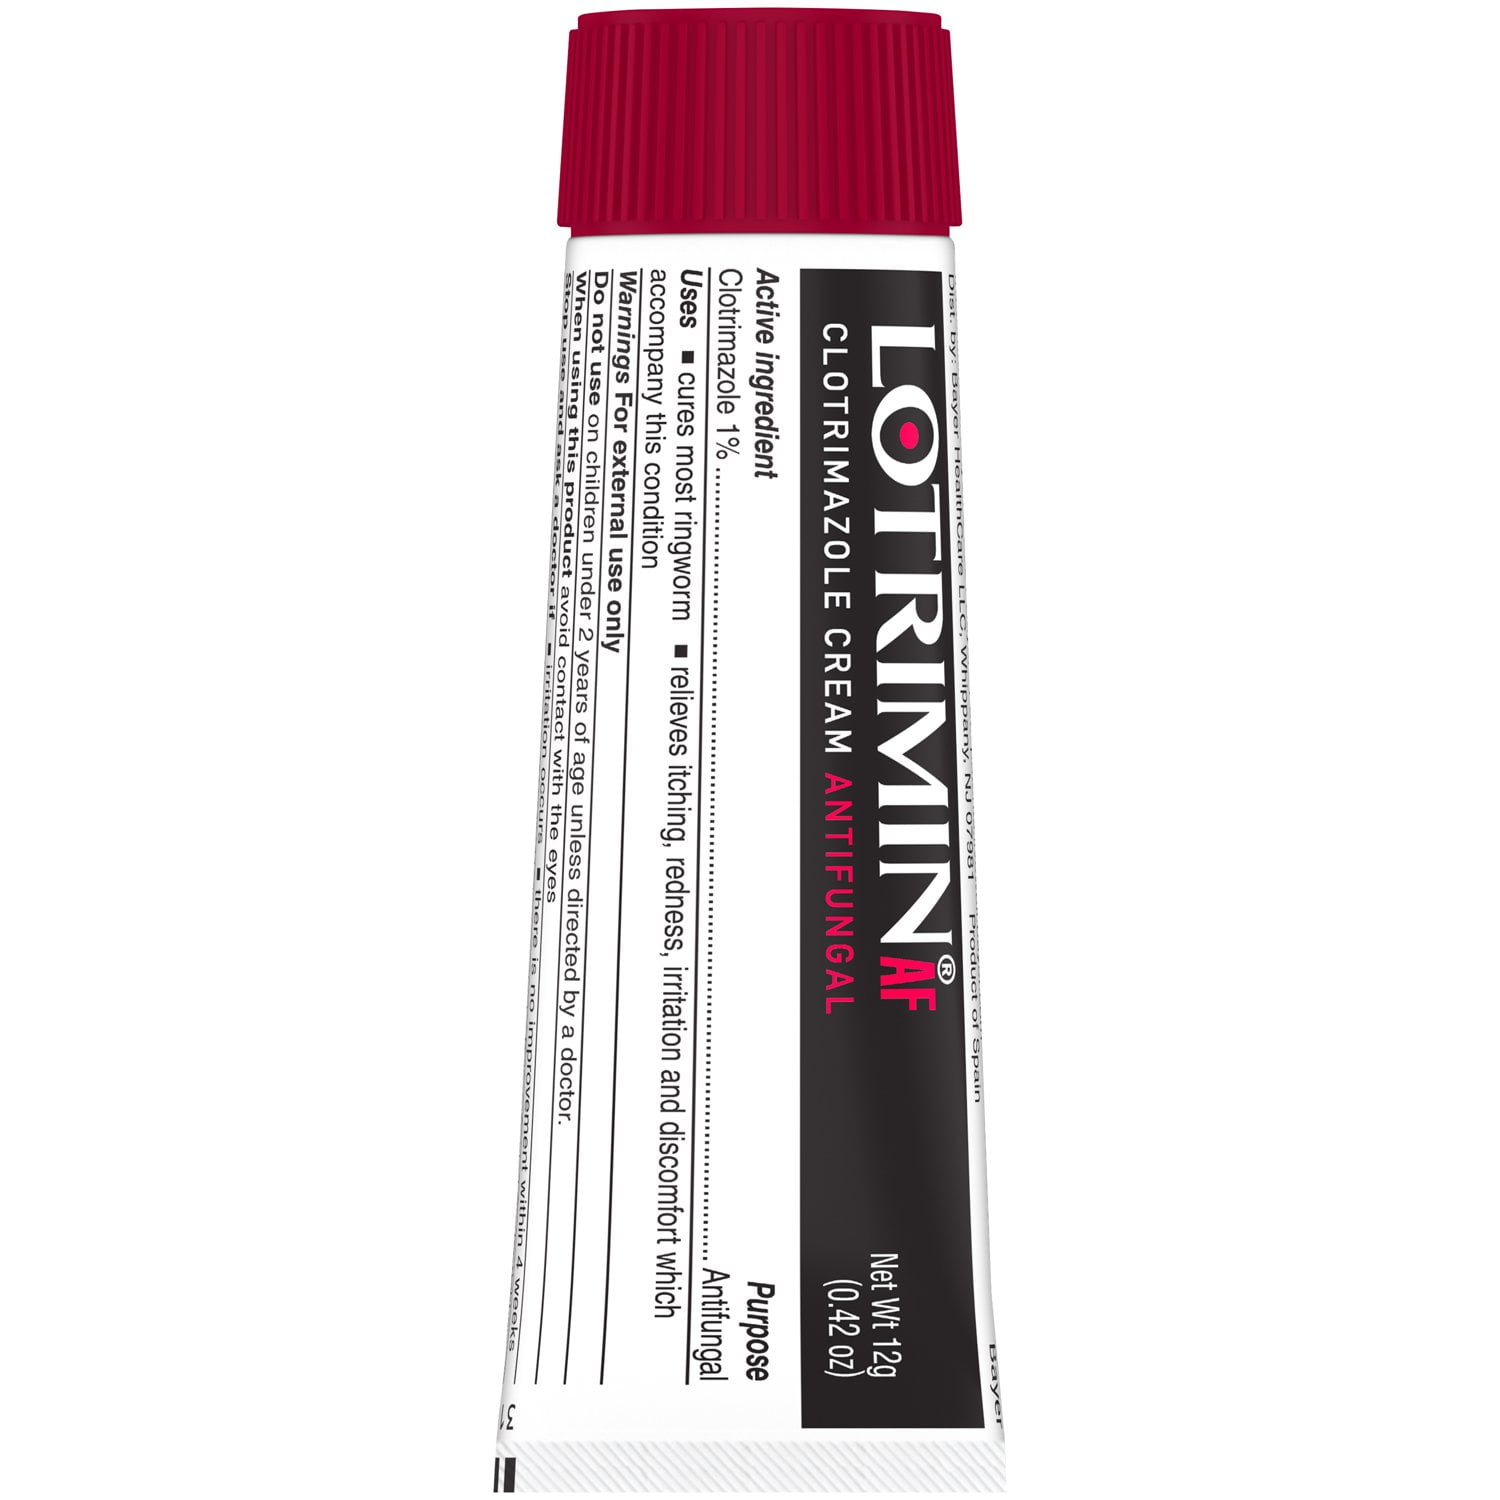 Lotrimin Daily Prevention Antifungal Deodorant Athletes Foot Spray, 5.6 oz  - Walmart.com